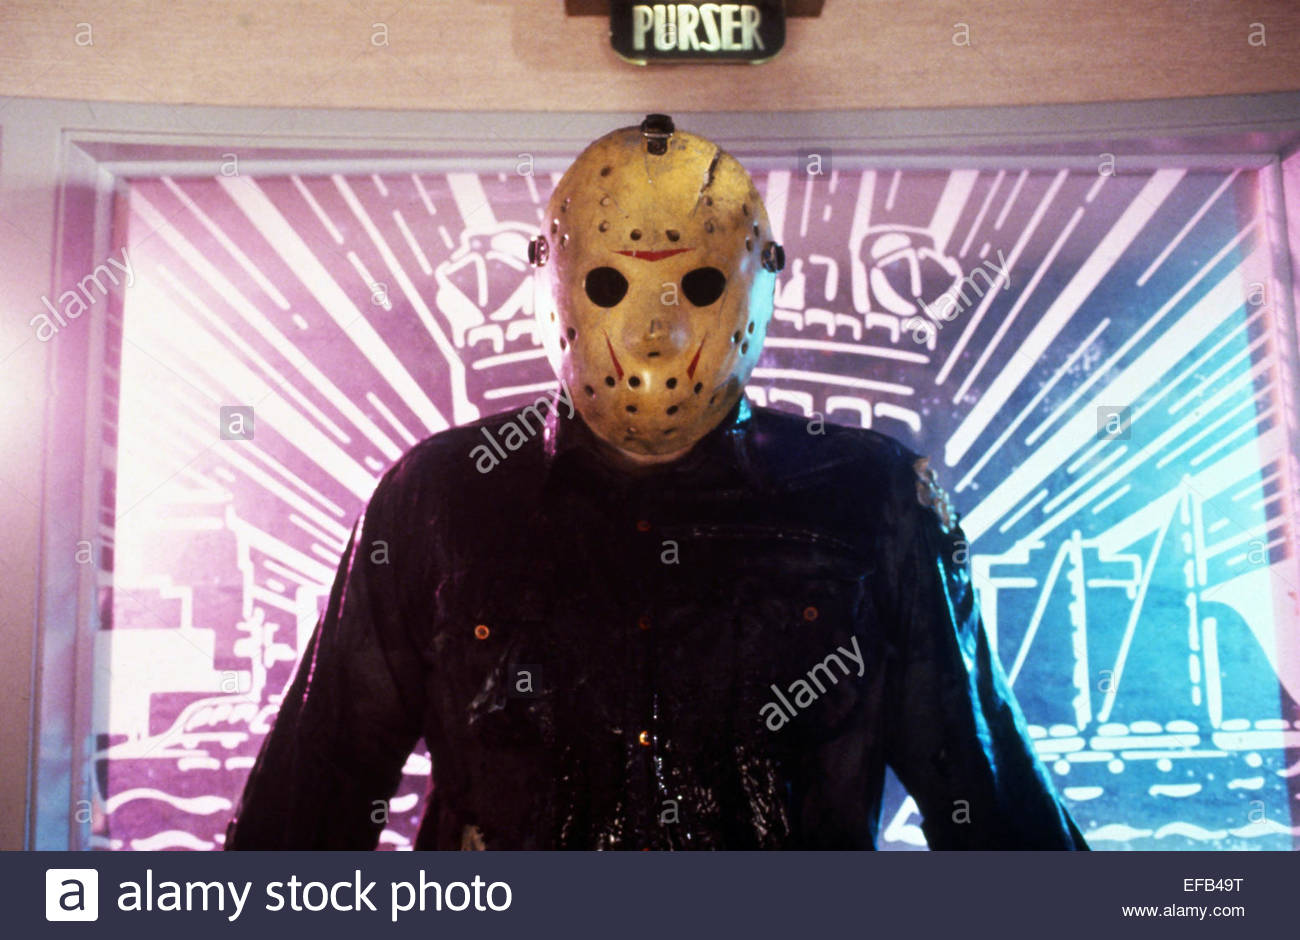 Friday The 13th Part VIII: Jason Takes Manhattan #7